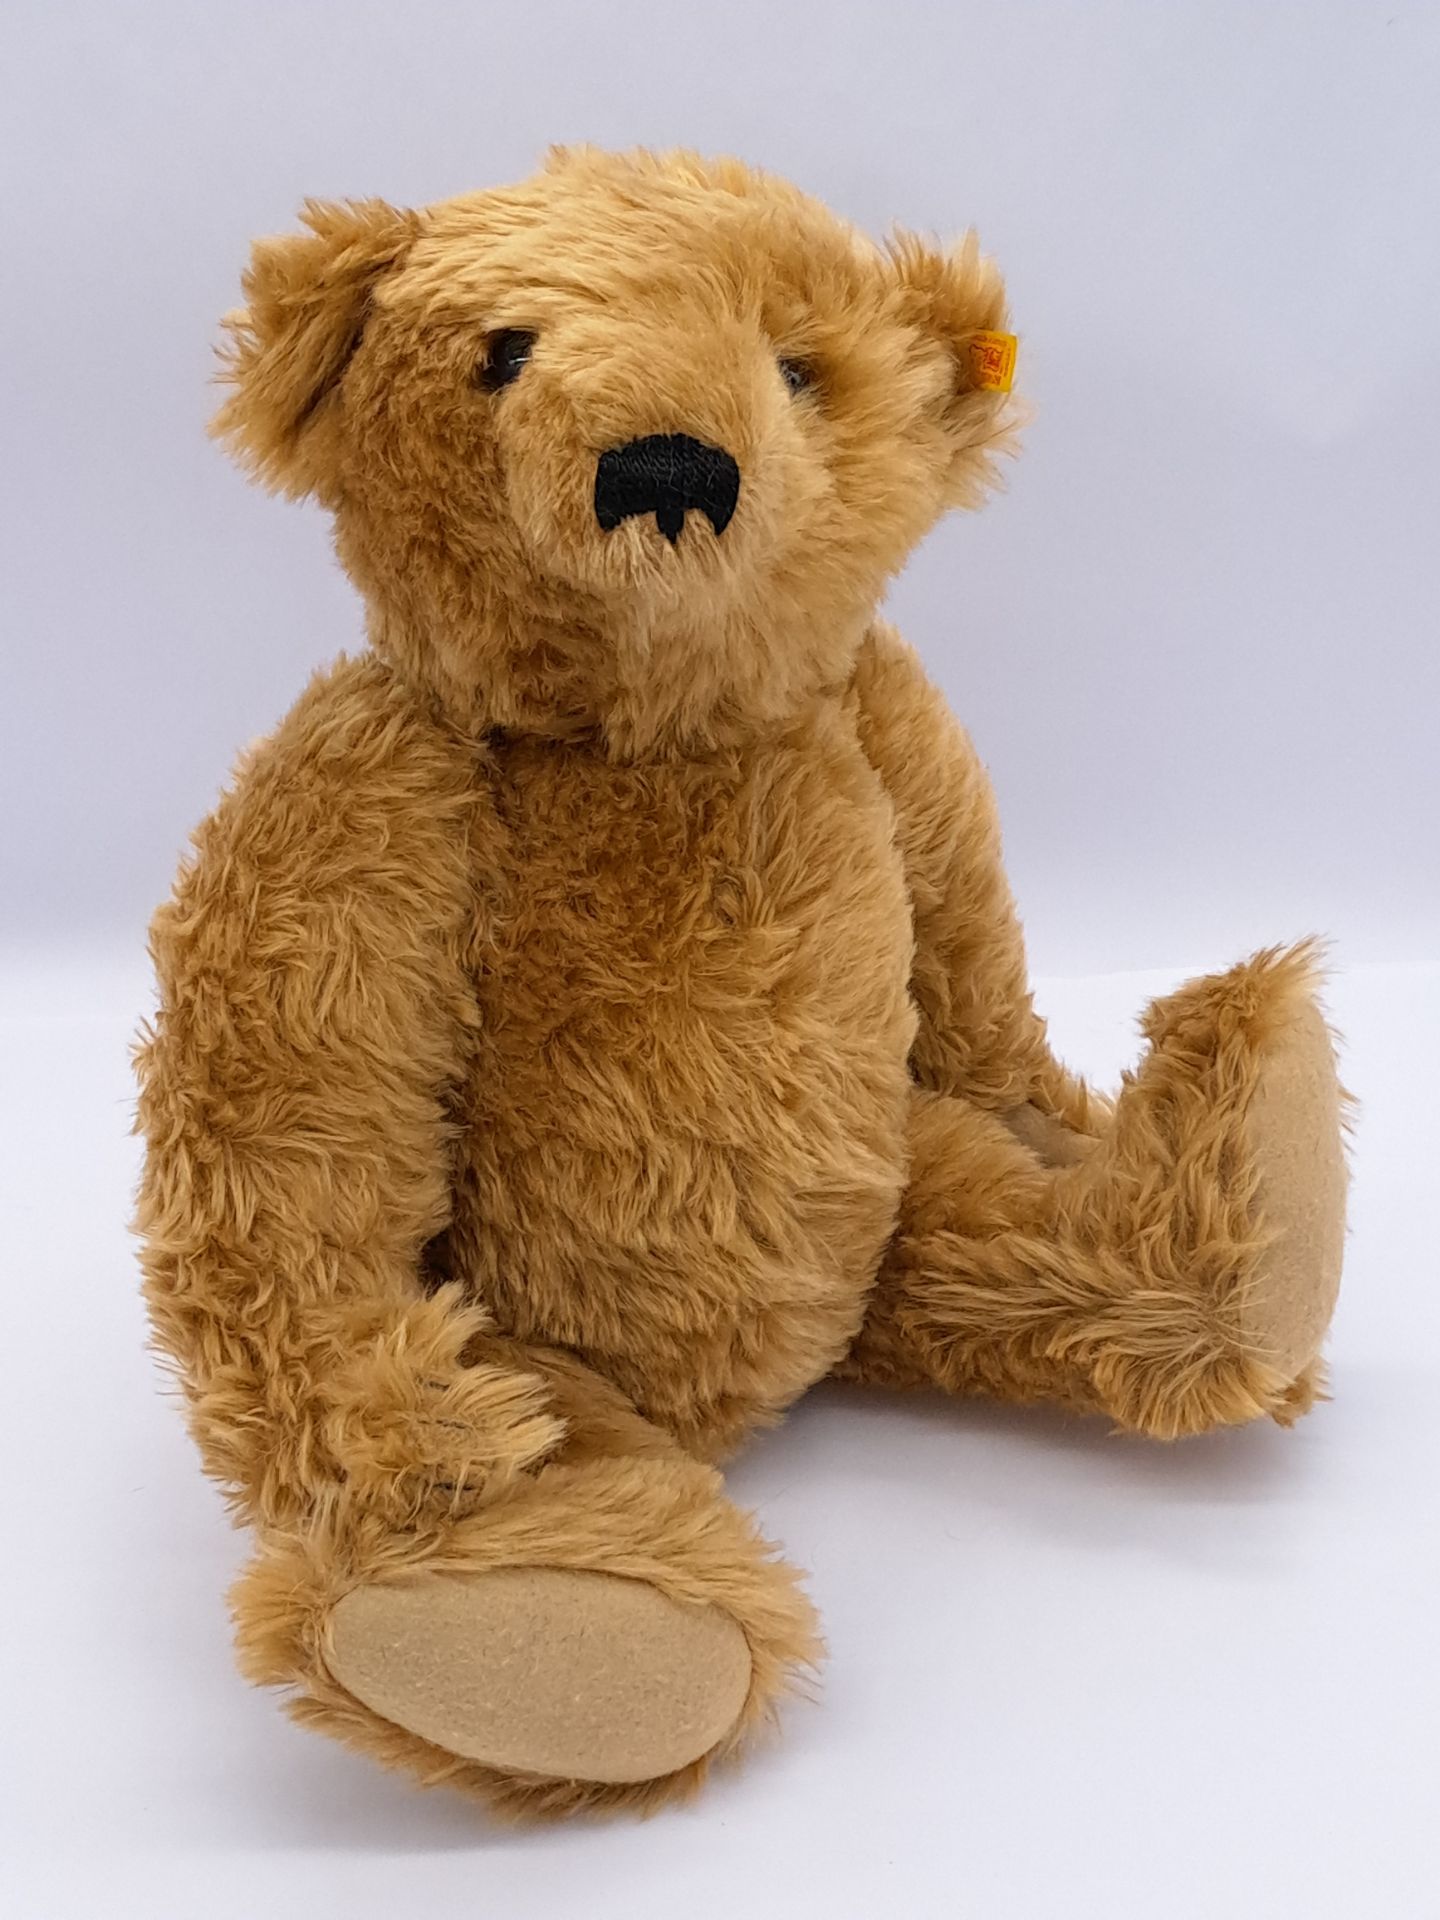 Steiff Classic 1903 Mr Cinnamon teddy bear replica